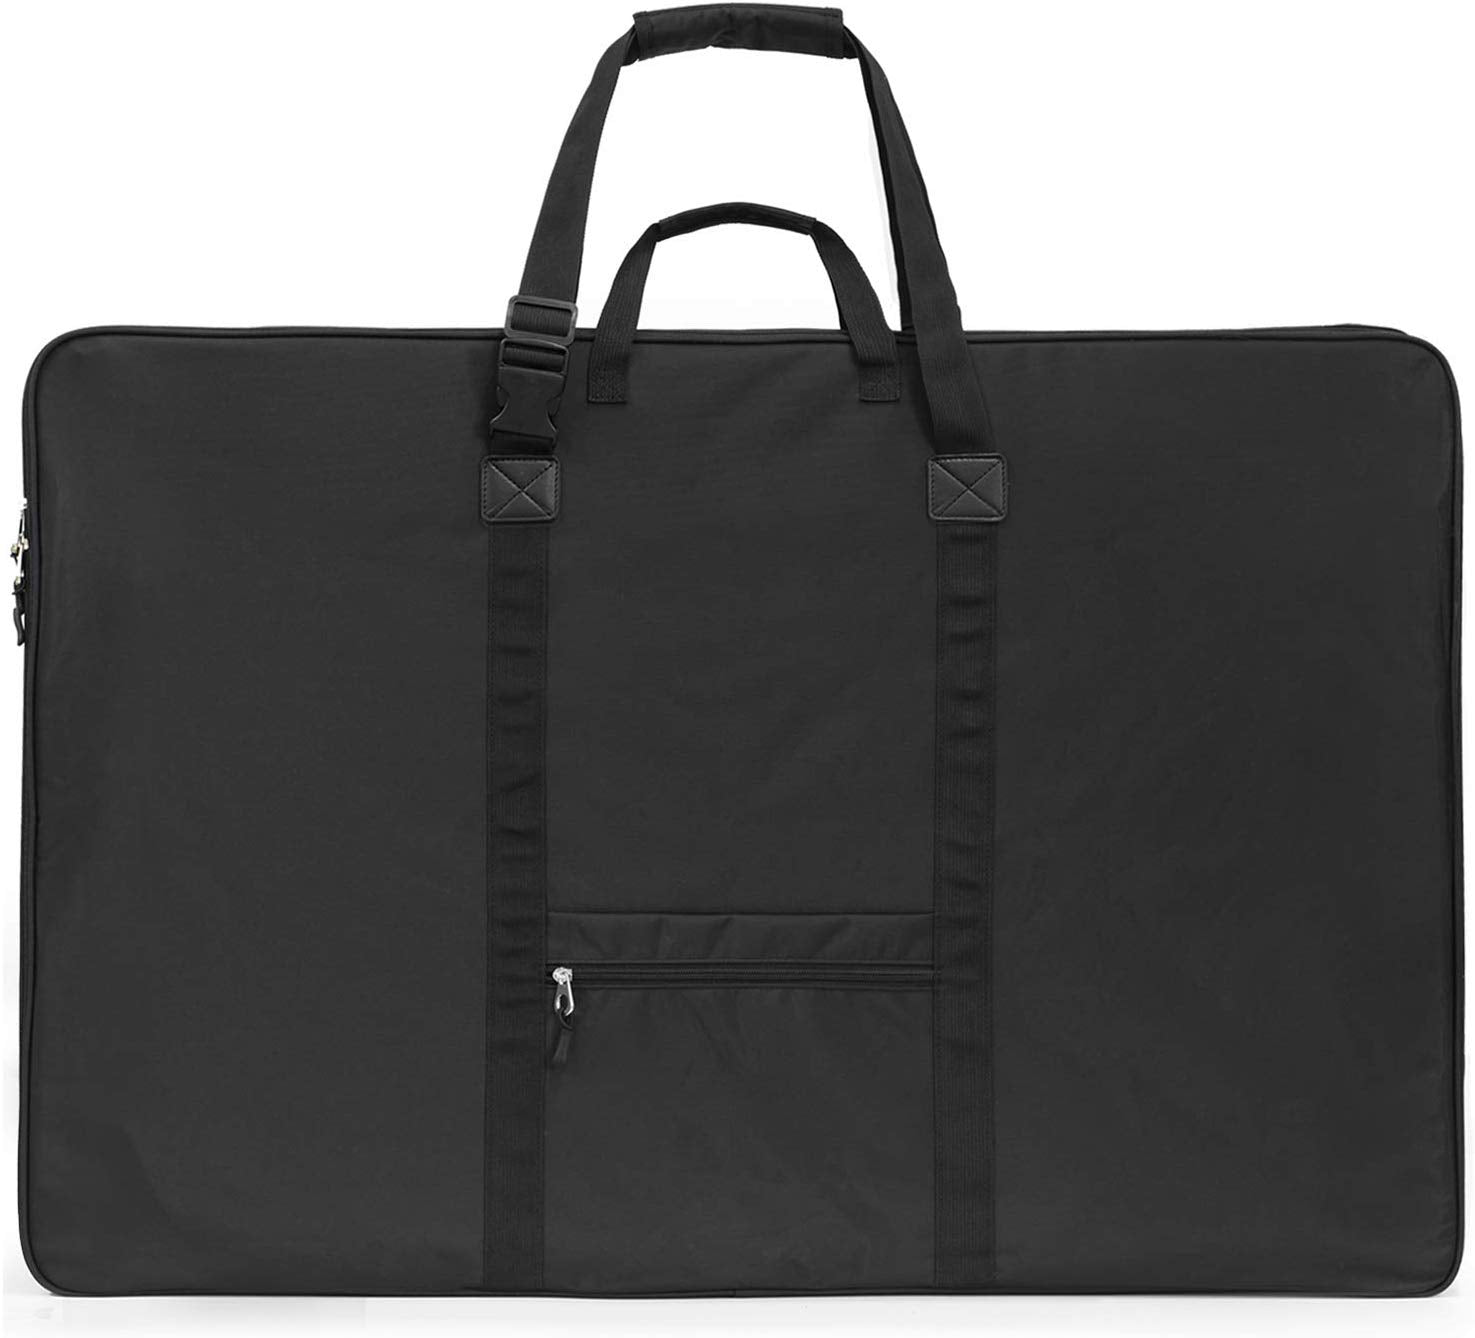 Nicpro Large Art Portfolio Bag 35 x 43 Inches Waterproof Nylon